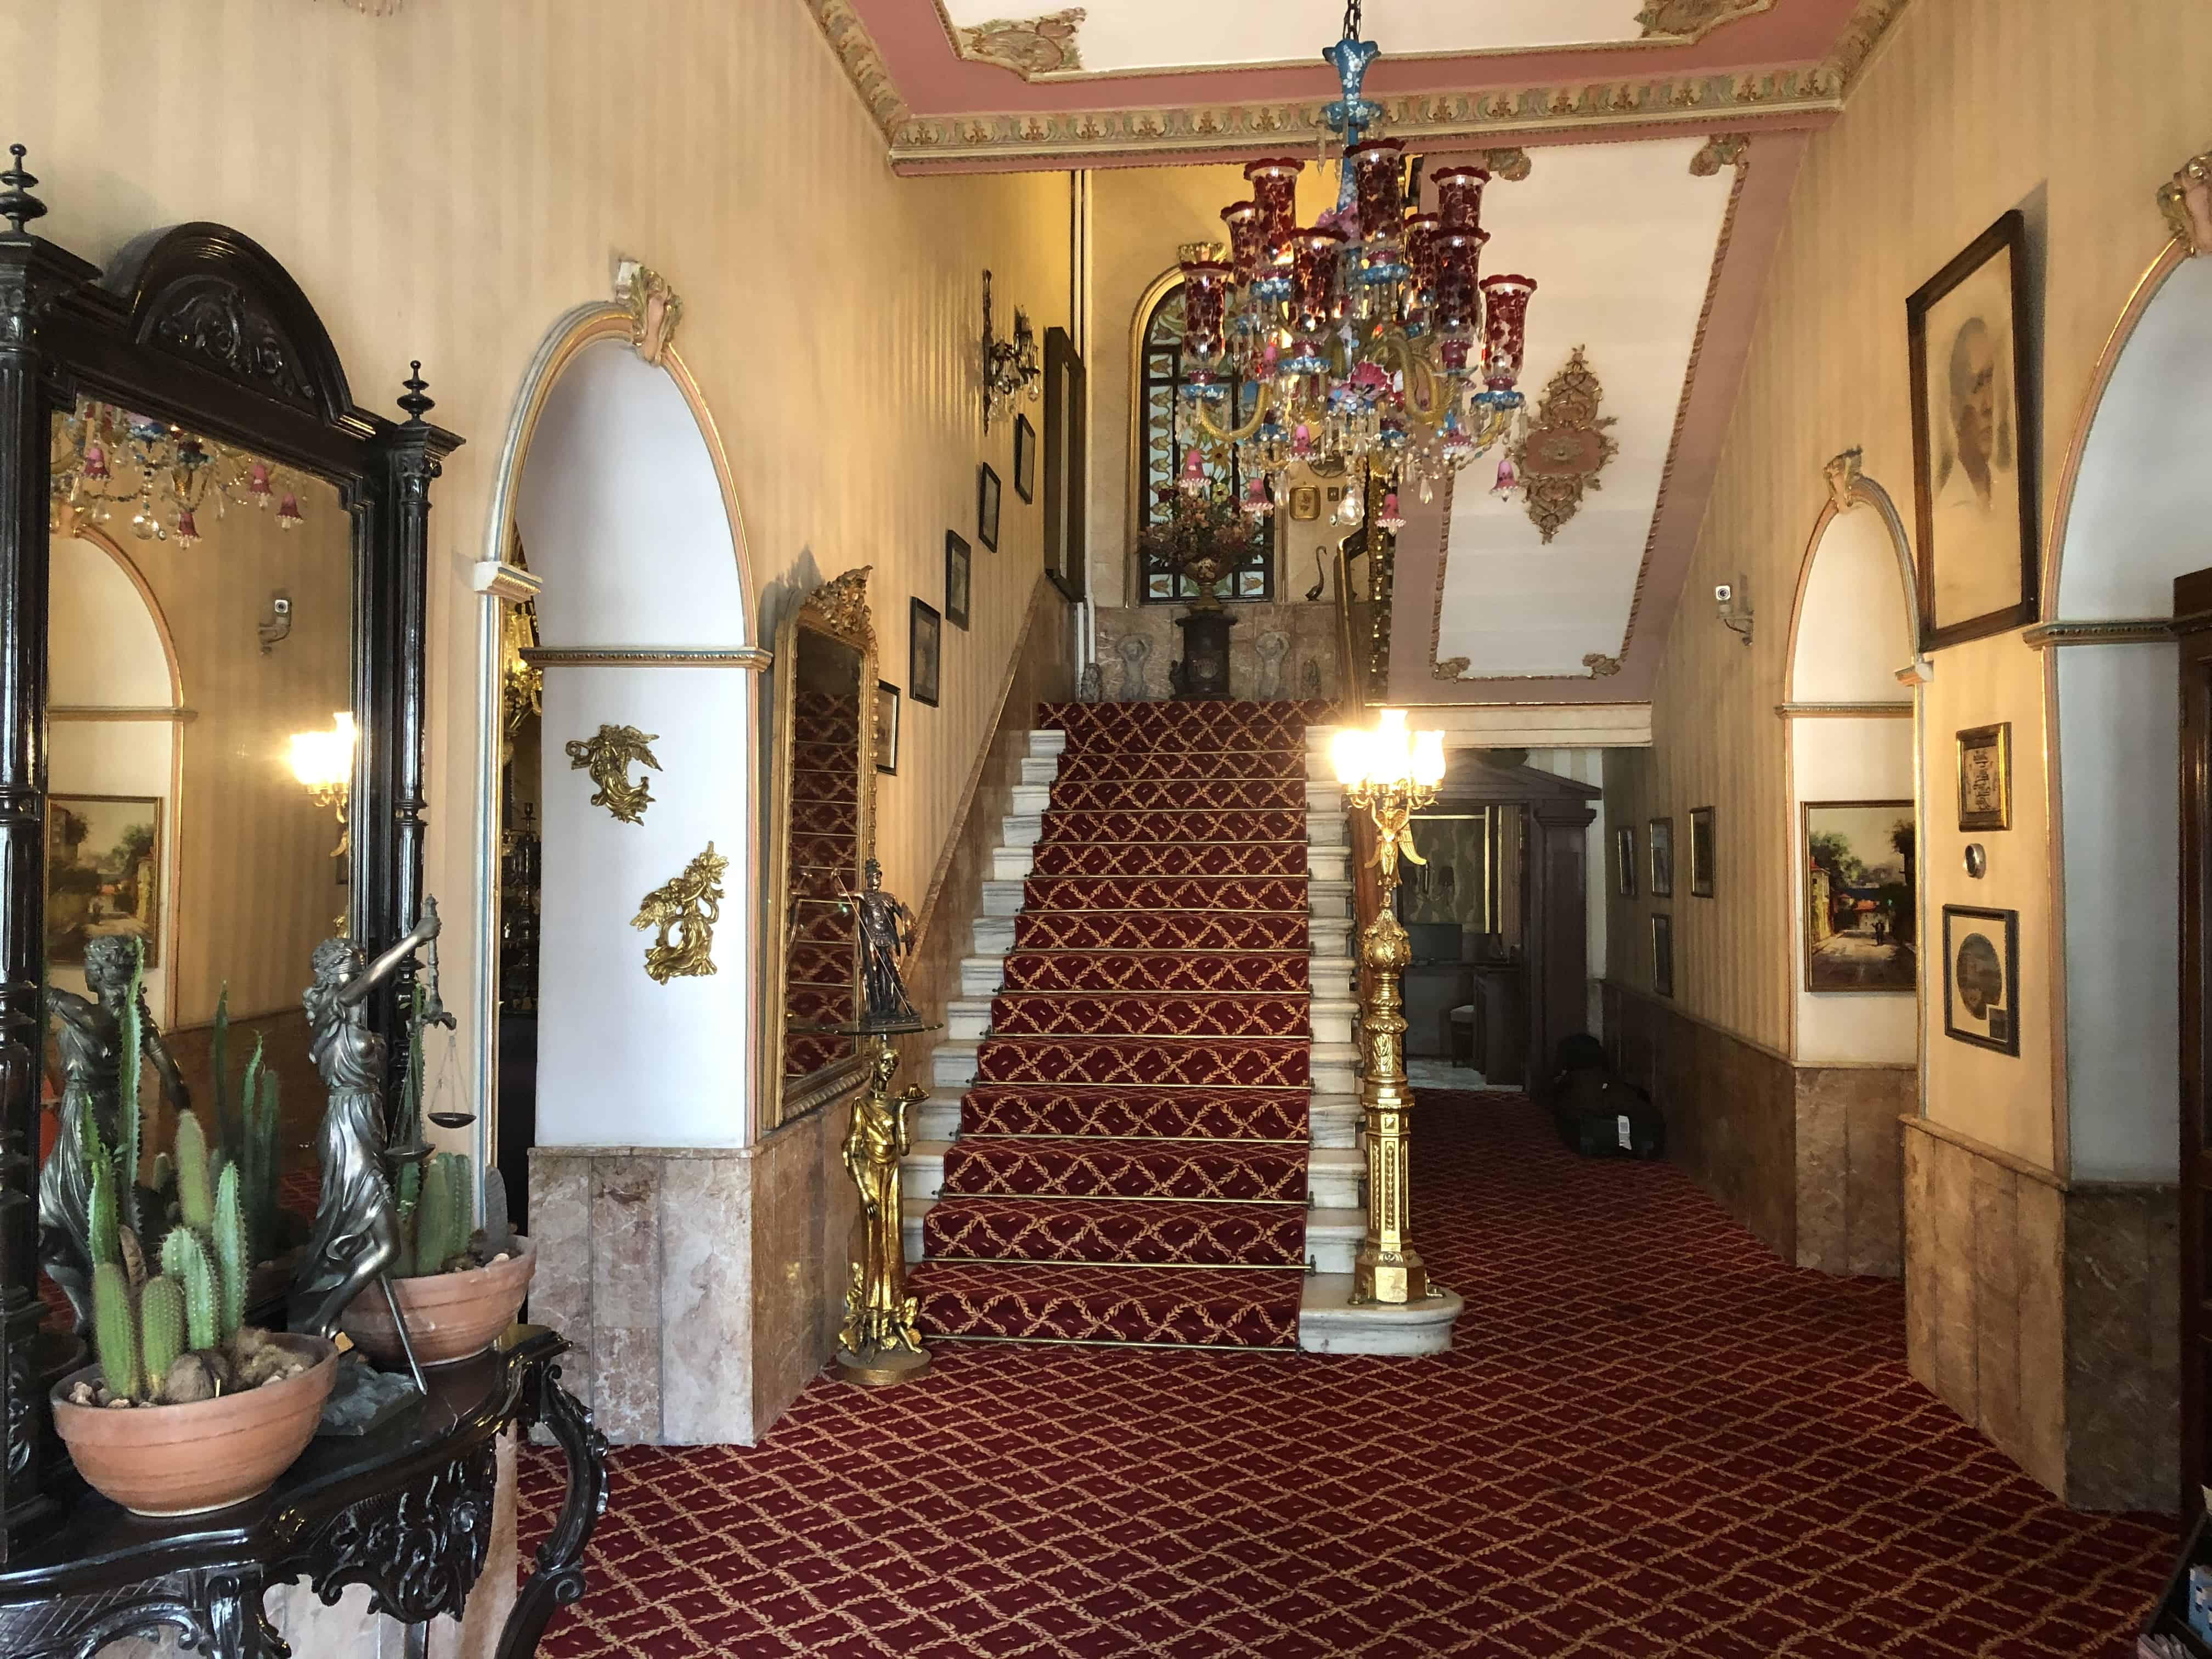 Lobby of the Grand Hotel de Londres in Tepebaşı, Istanbul, Turkey